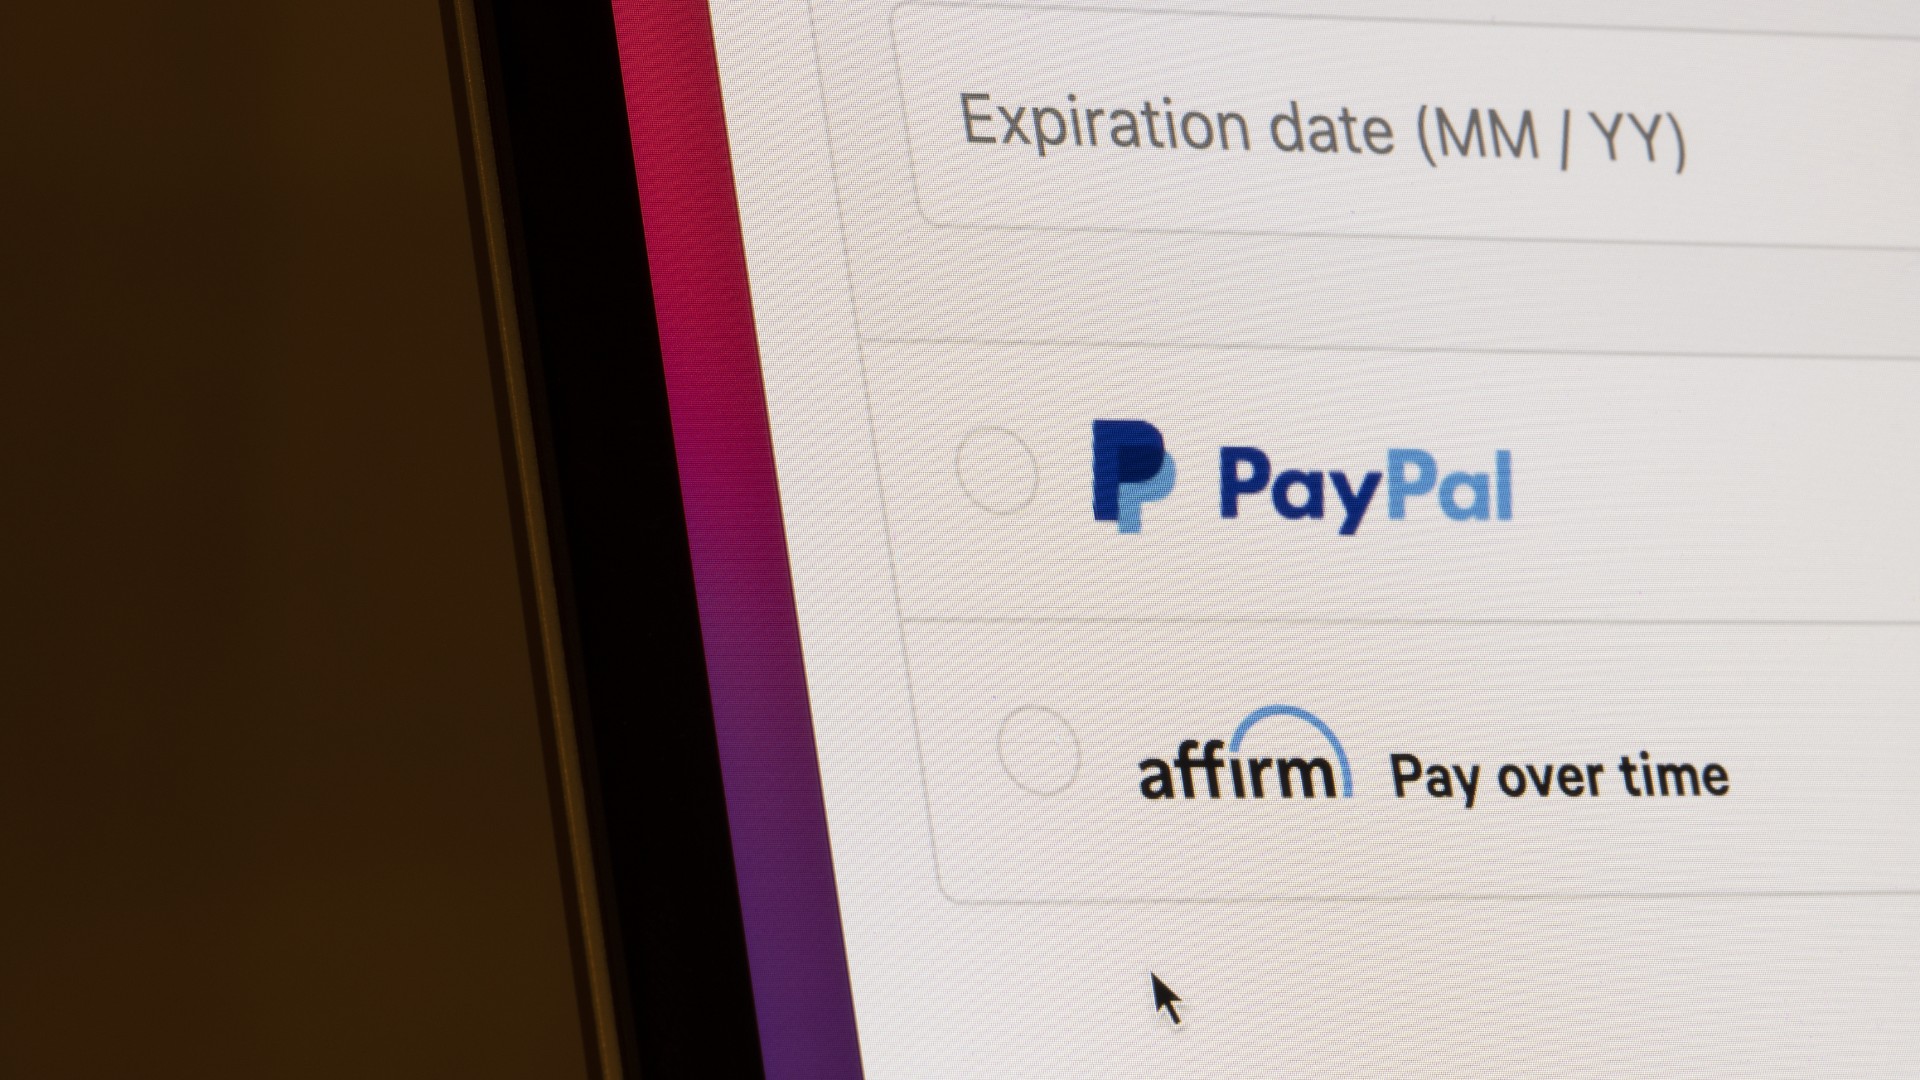 Webshop payment options - paypal & affirm